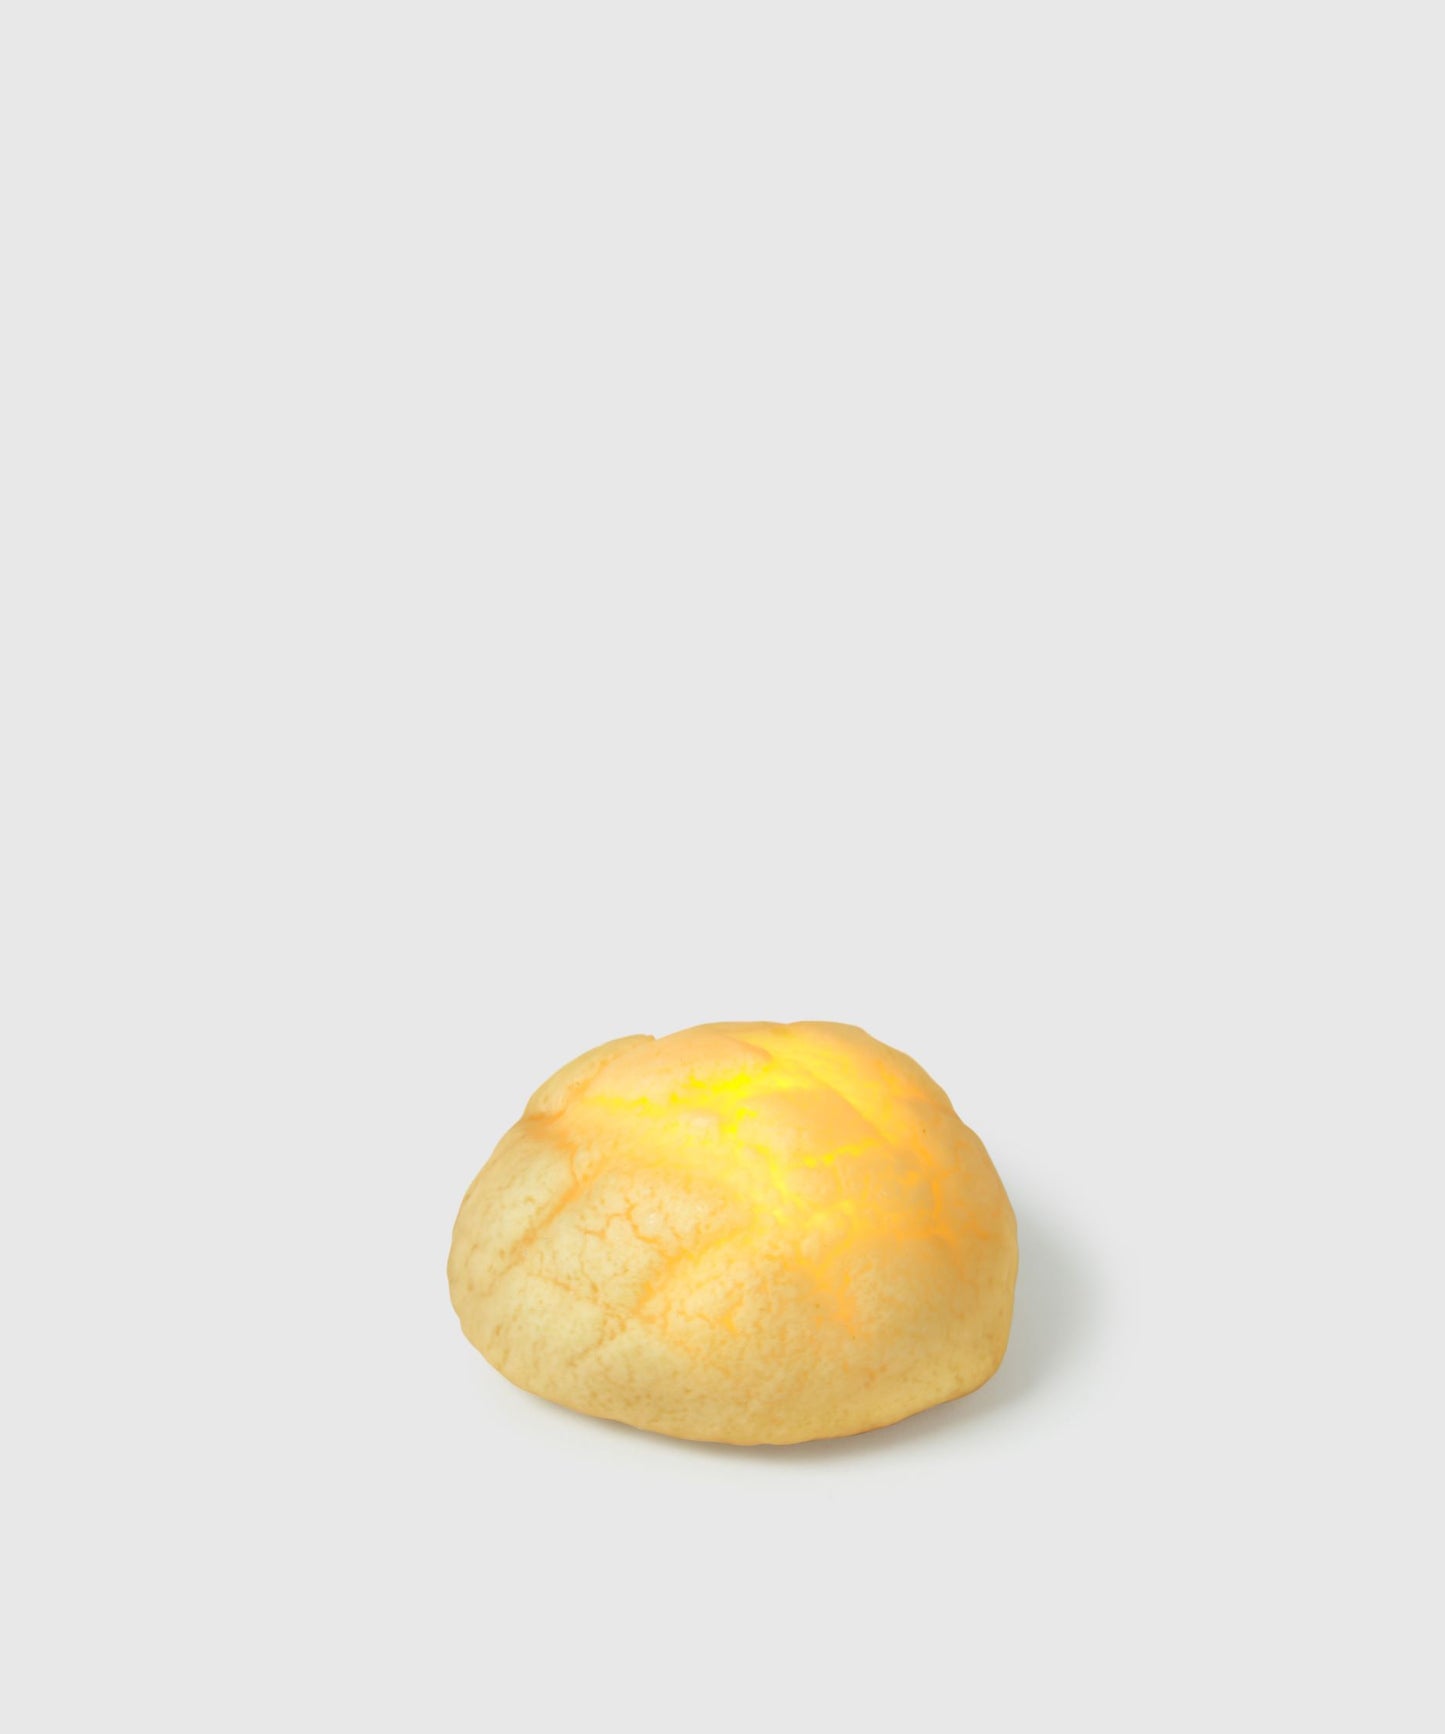 Brioche Bread Light by Pampshade | KonMari by Marie Kondo 